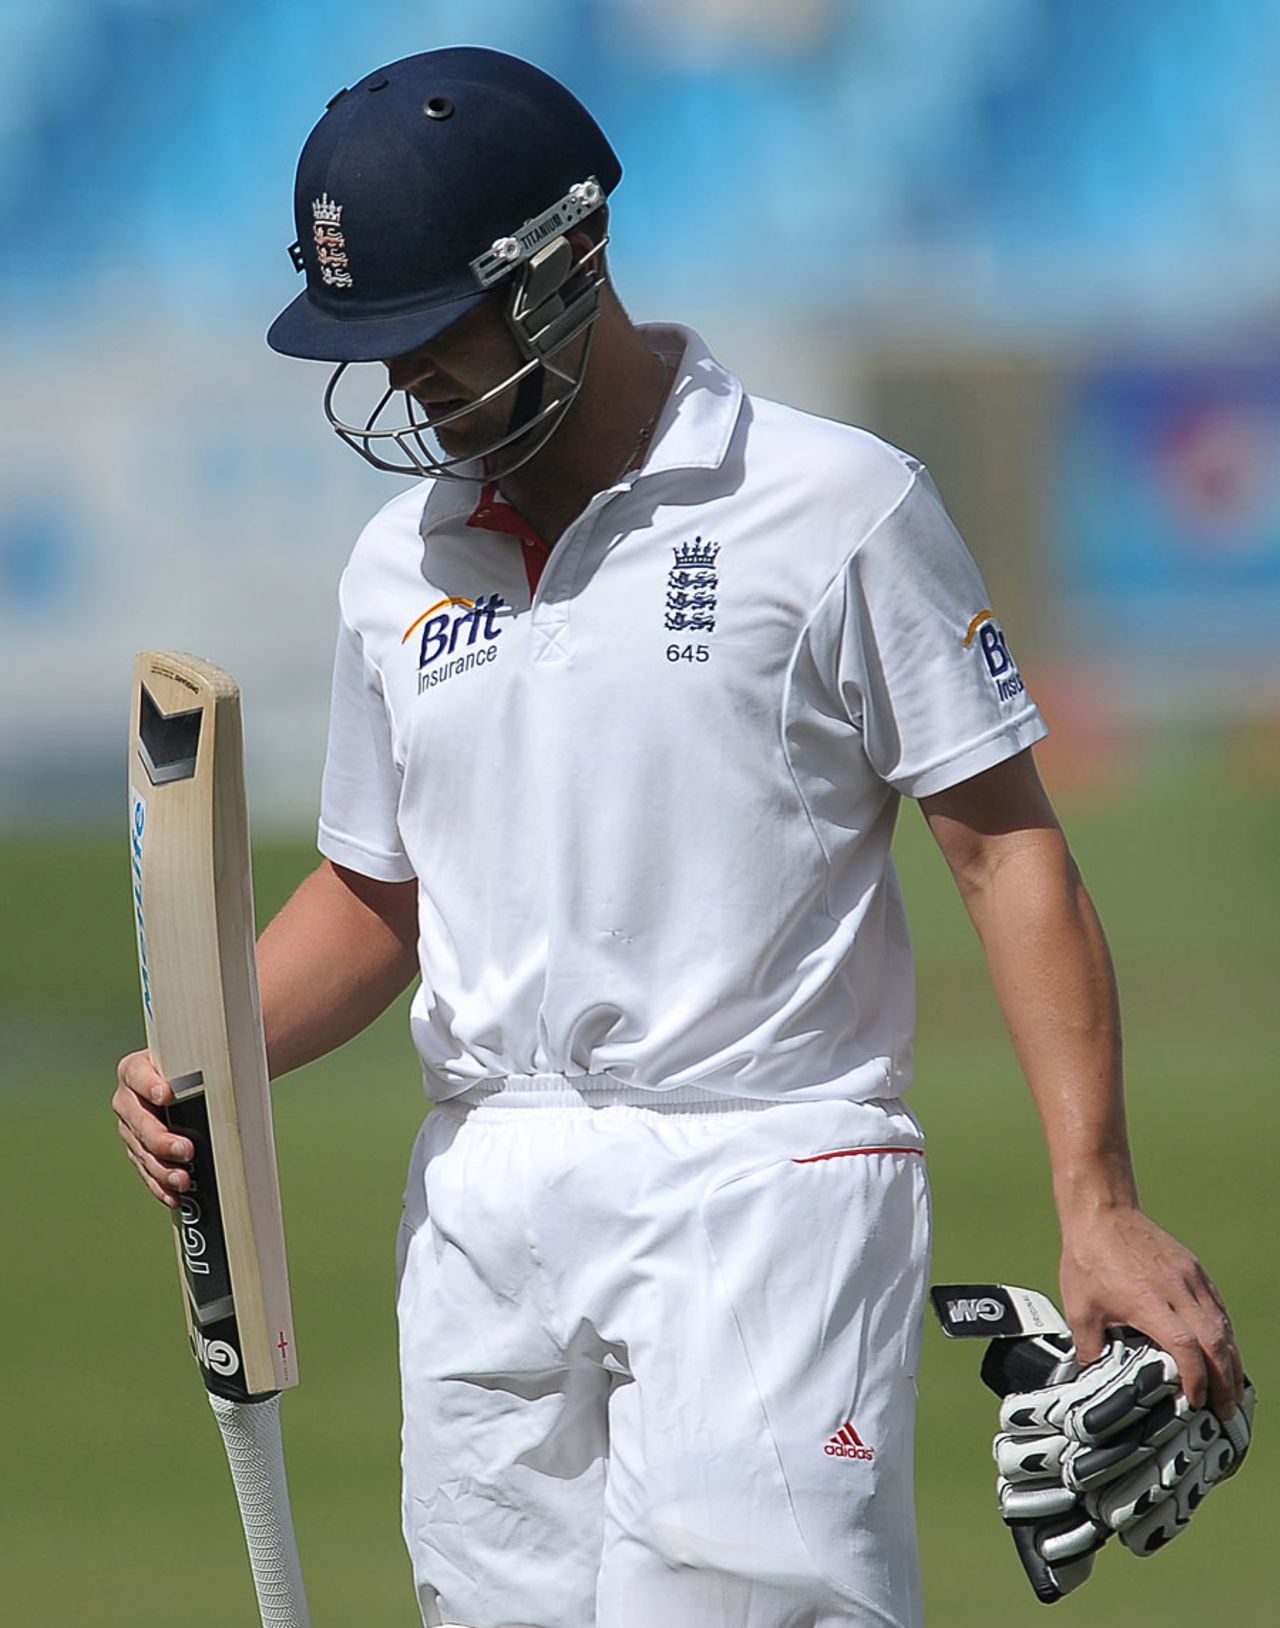 Jonathan Trott walks back after skying a catch, Pakistan v England, 3rd Test, Dubai, 4th day, February 6, 2012 